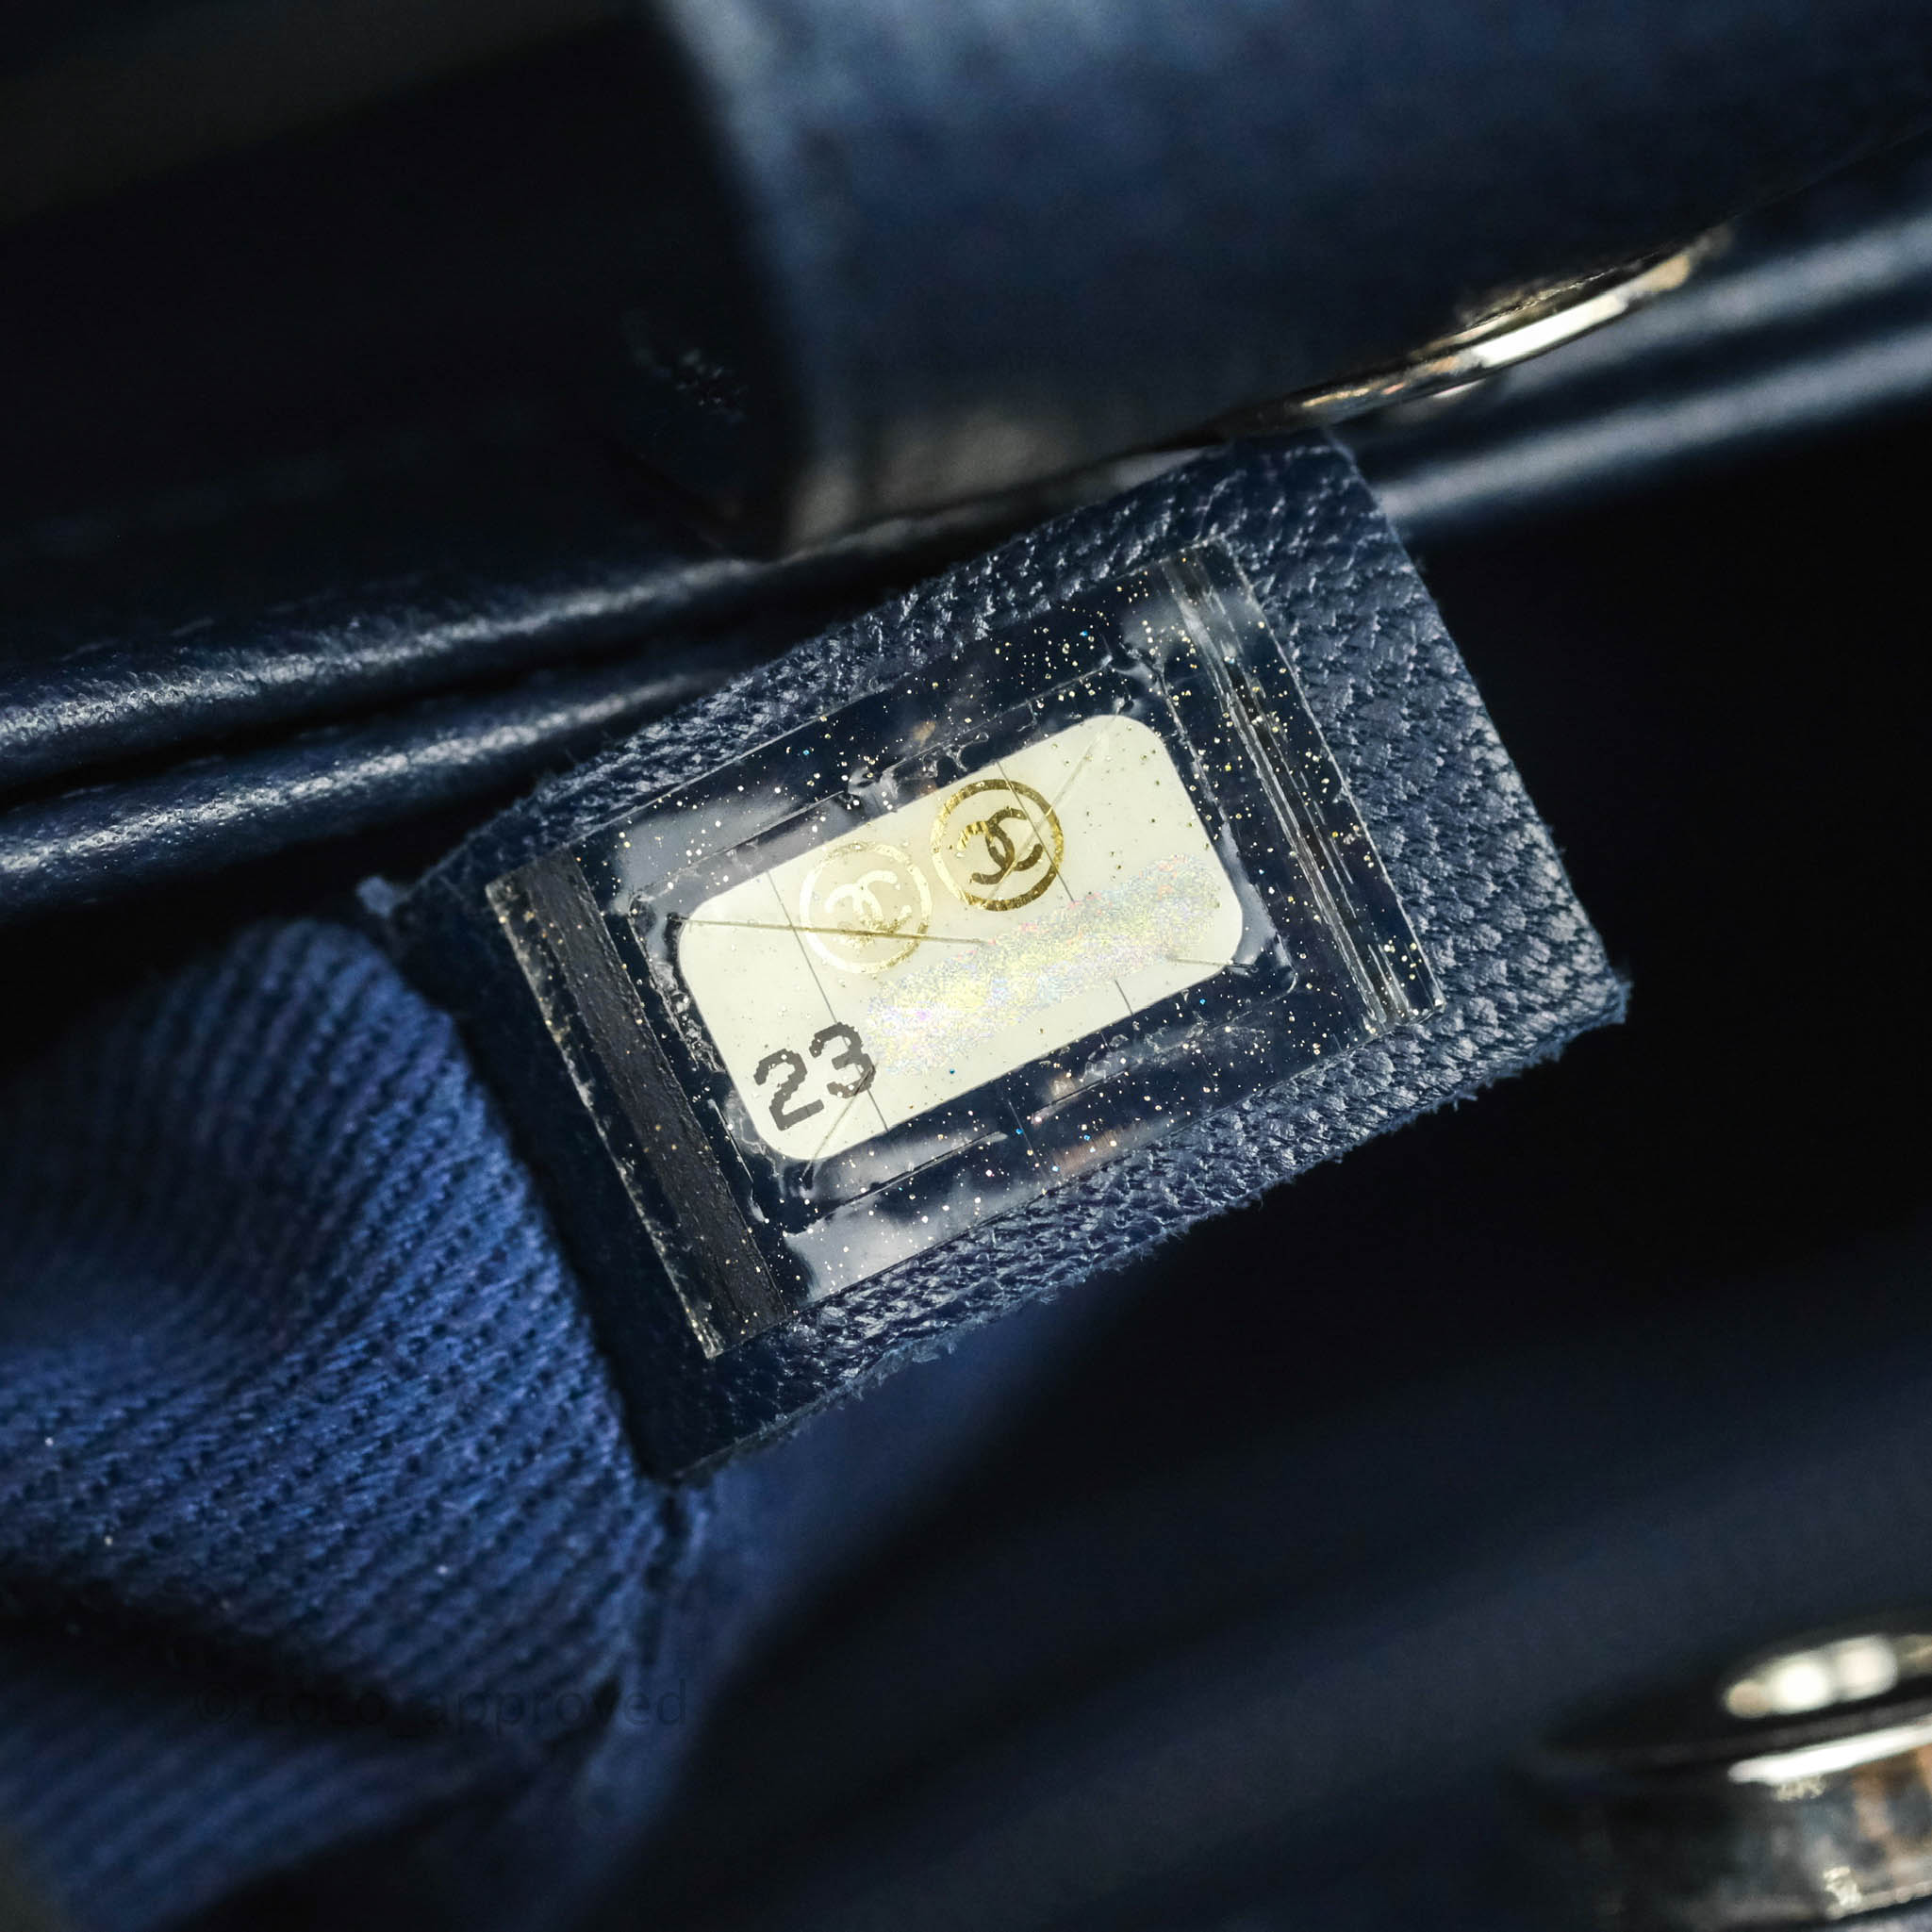 Chanel Mini Neo Executive Shopper Tote Black Grained Calfskin Navy Sil –  Coco Approved Studio